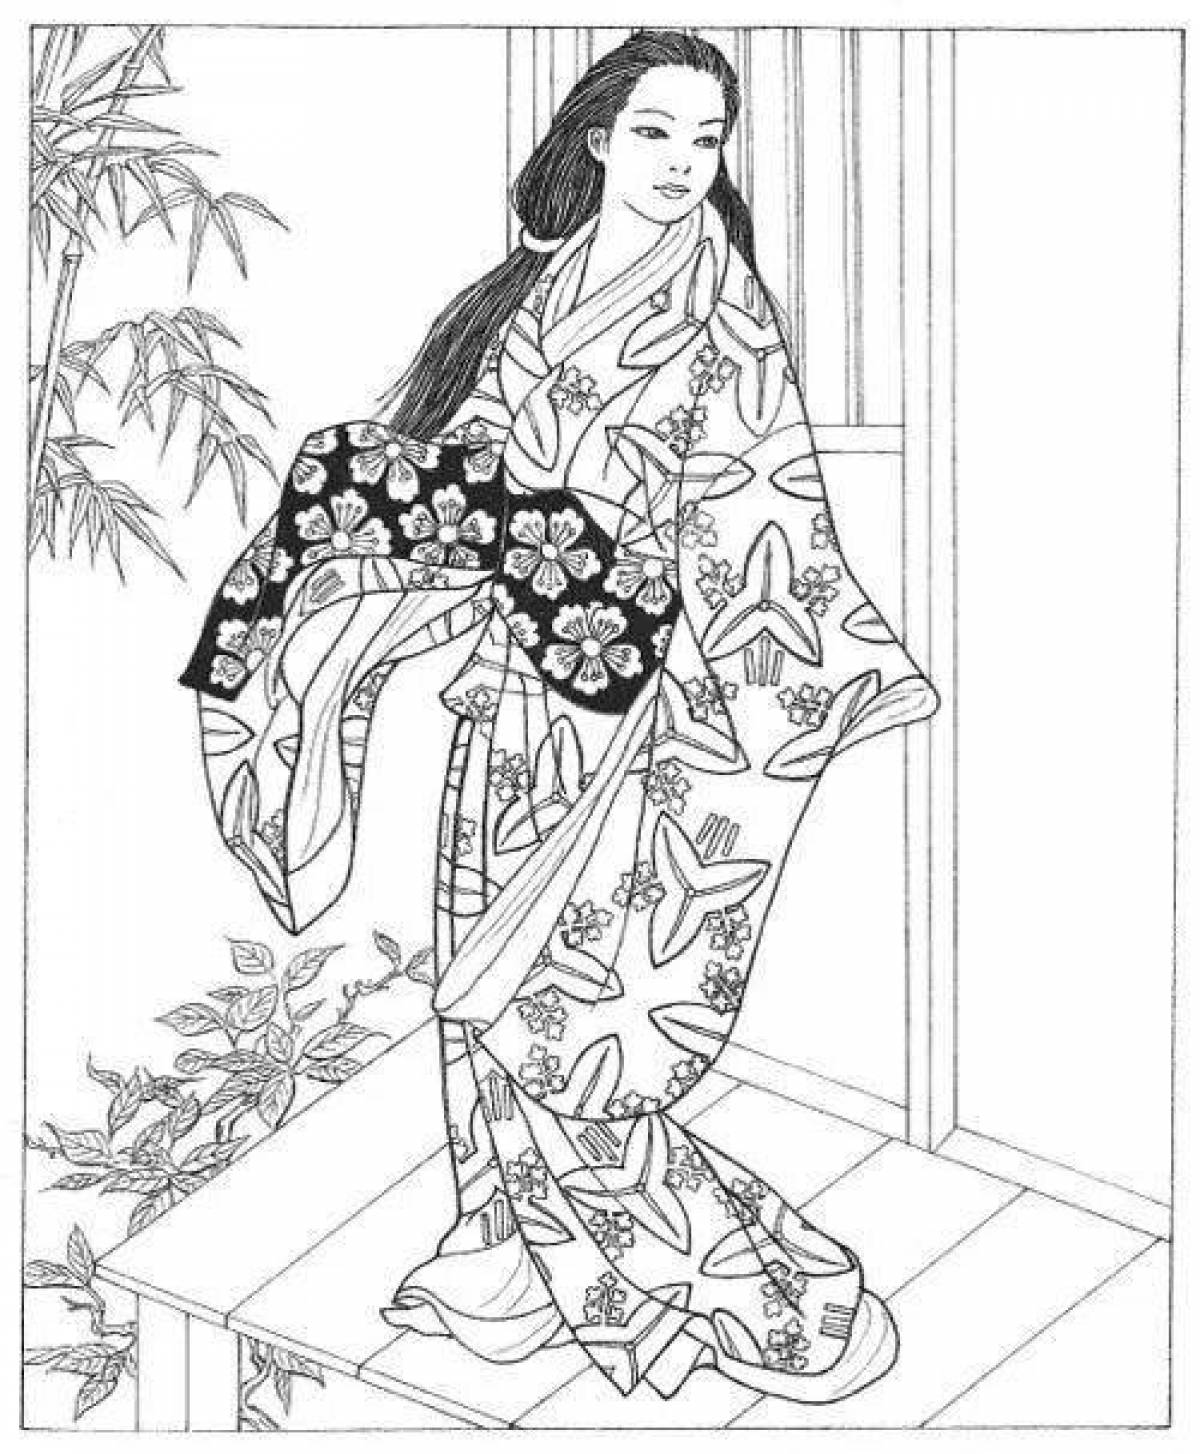 Random japanese woman in kimono